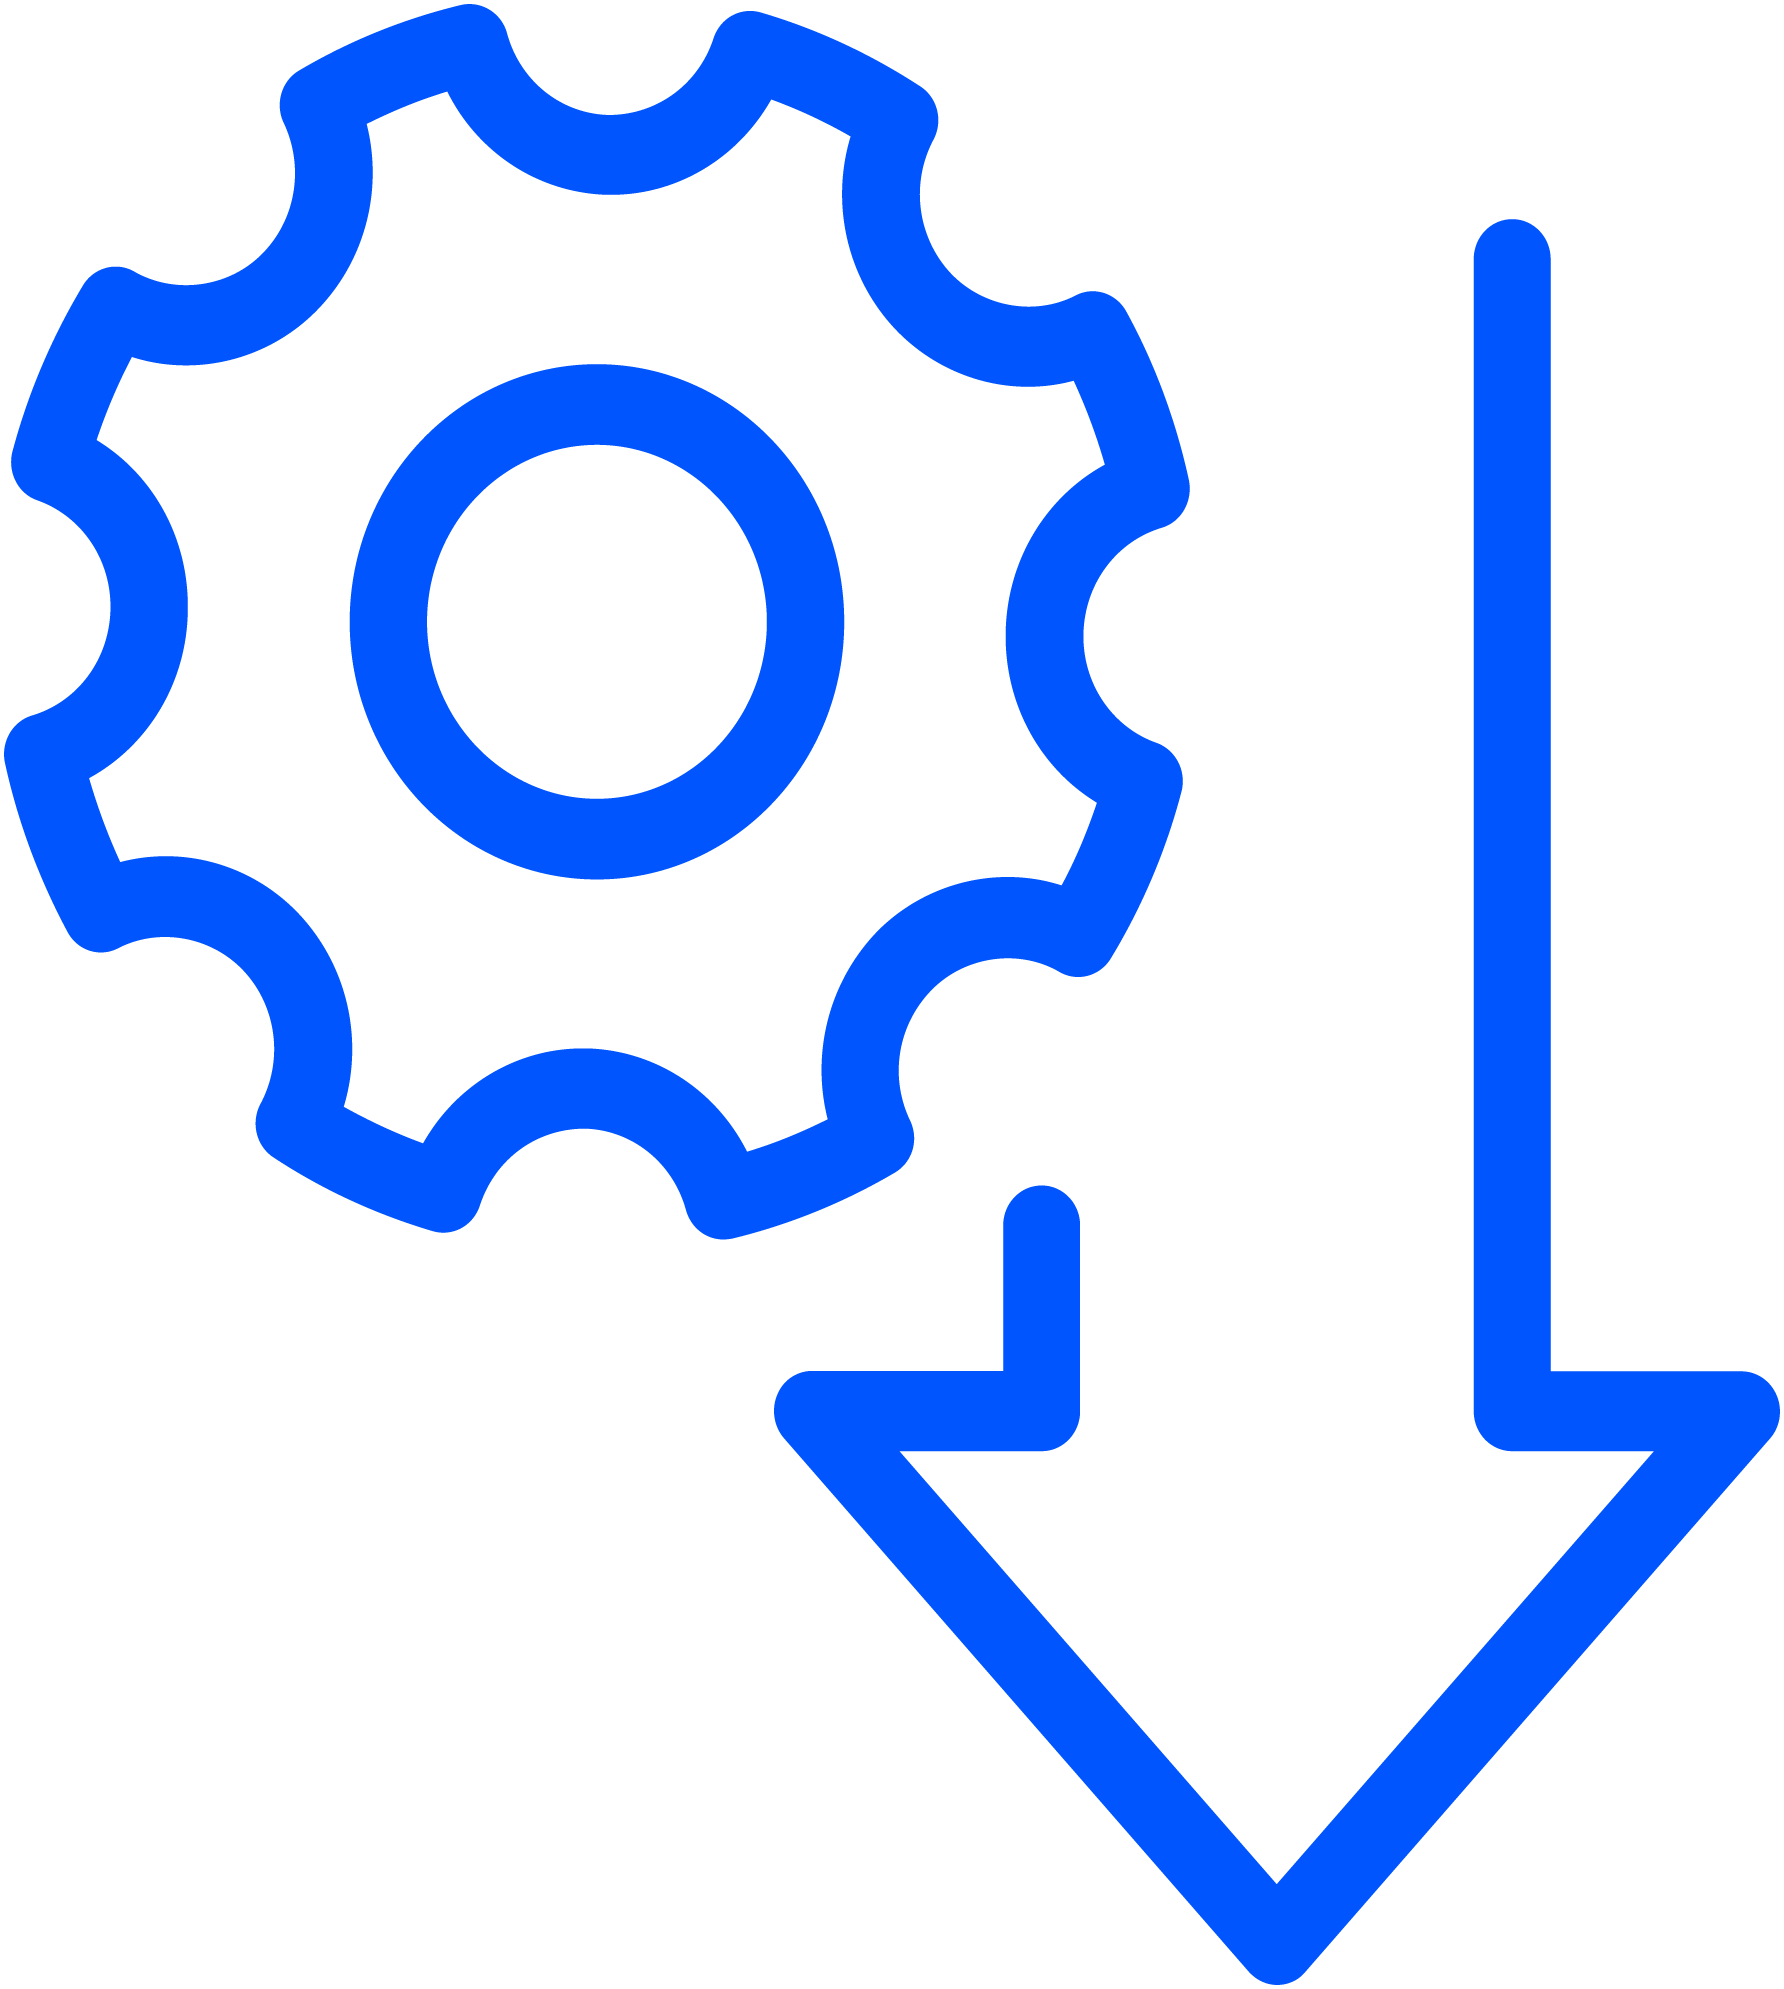 Blue icon